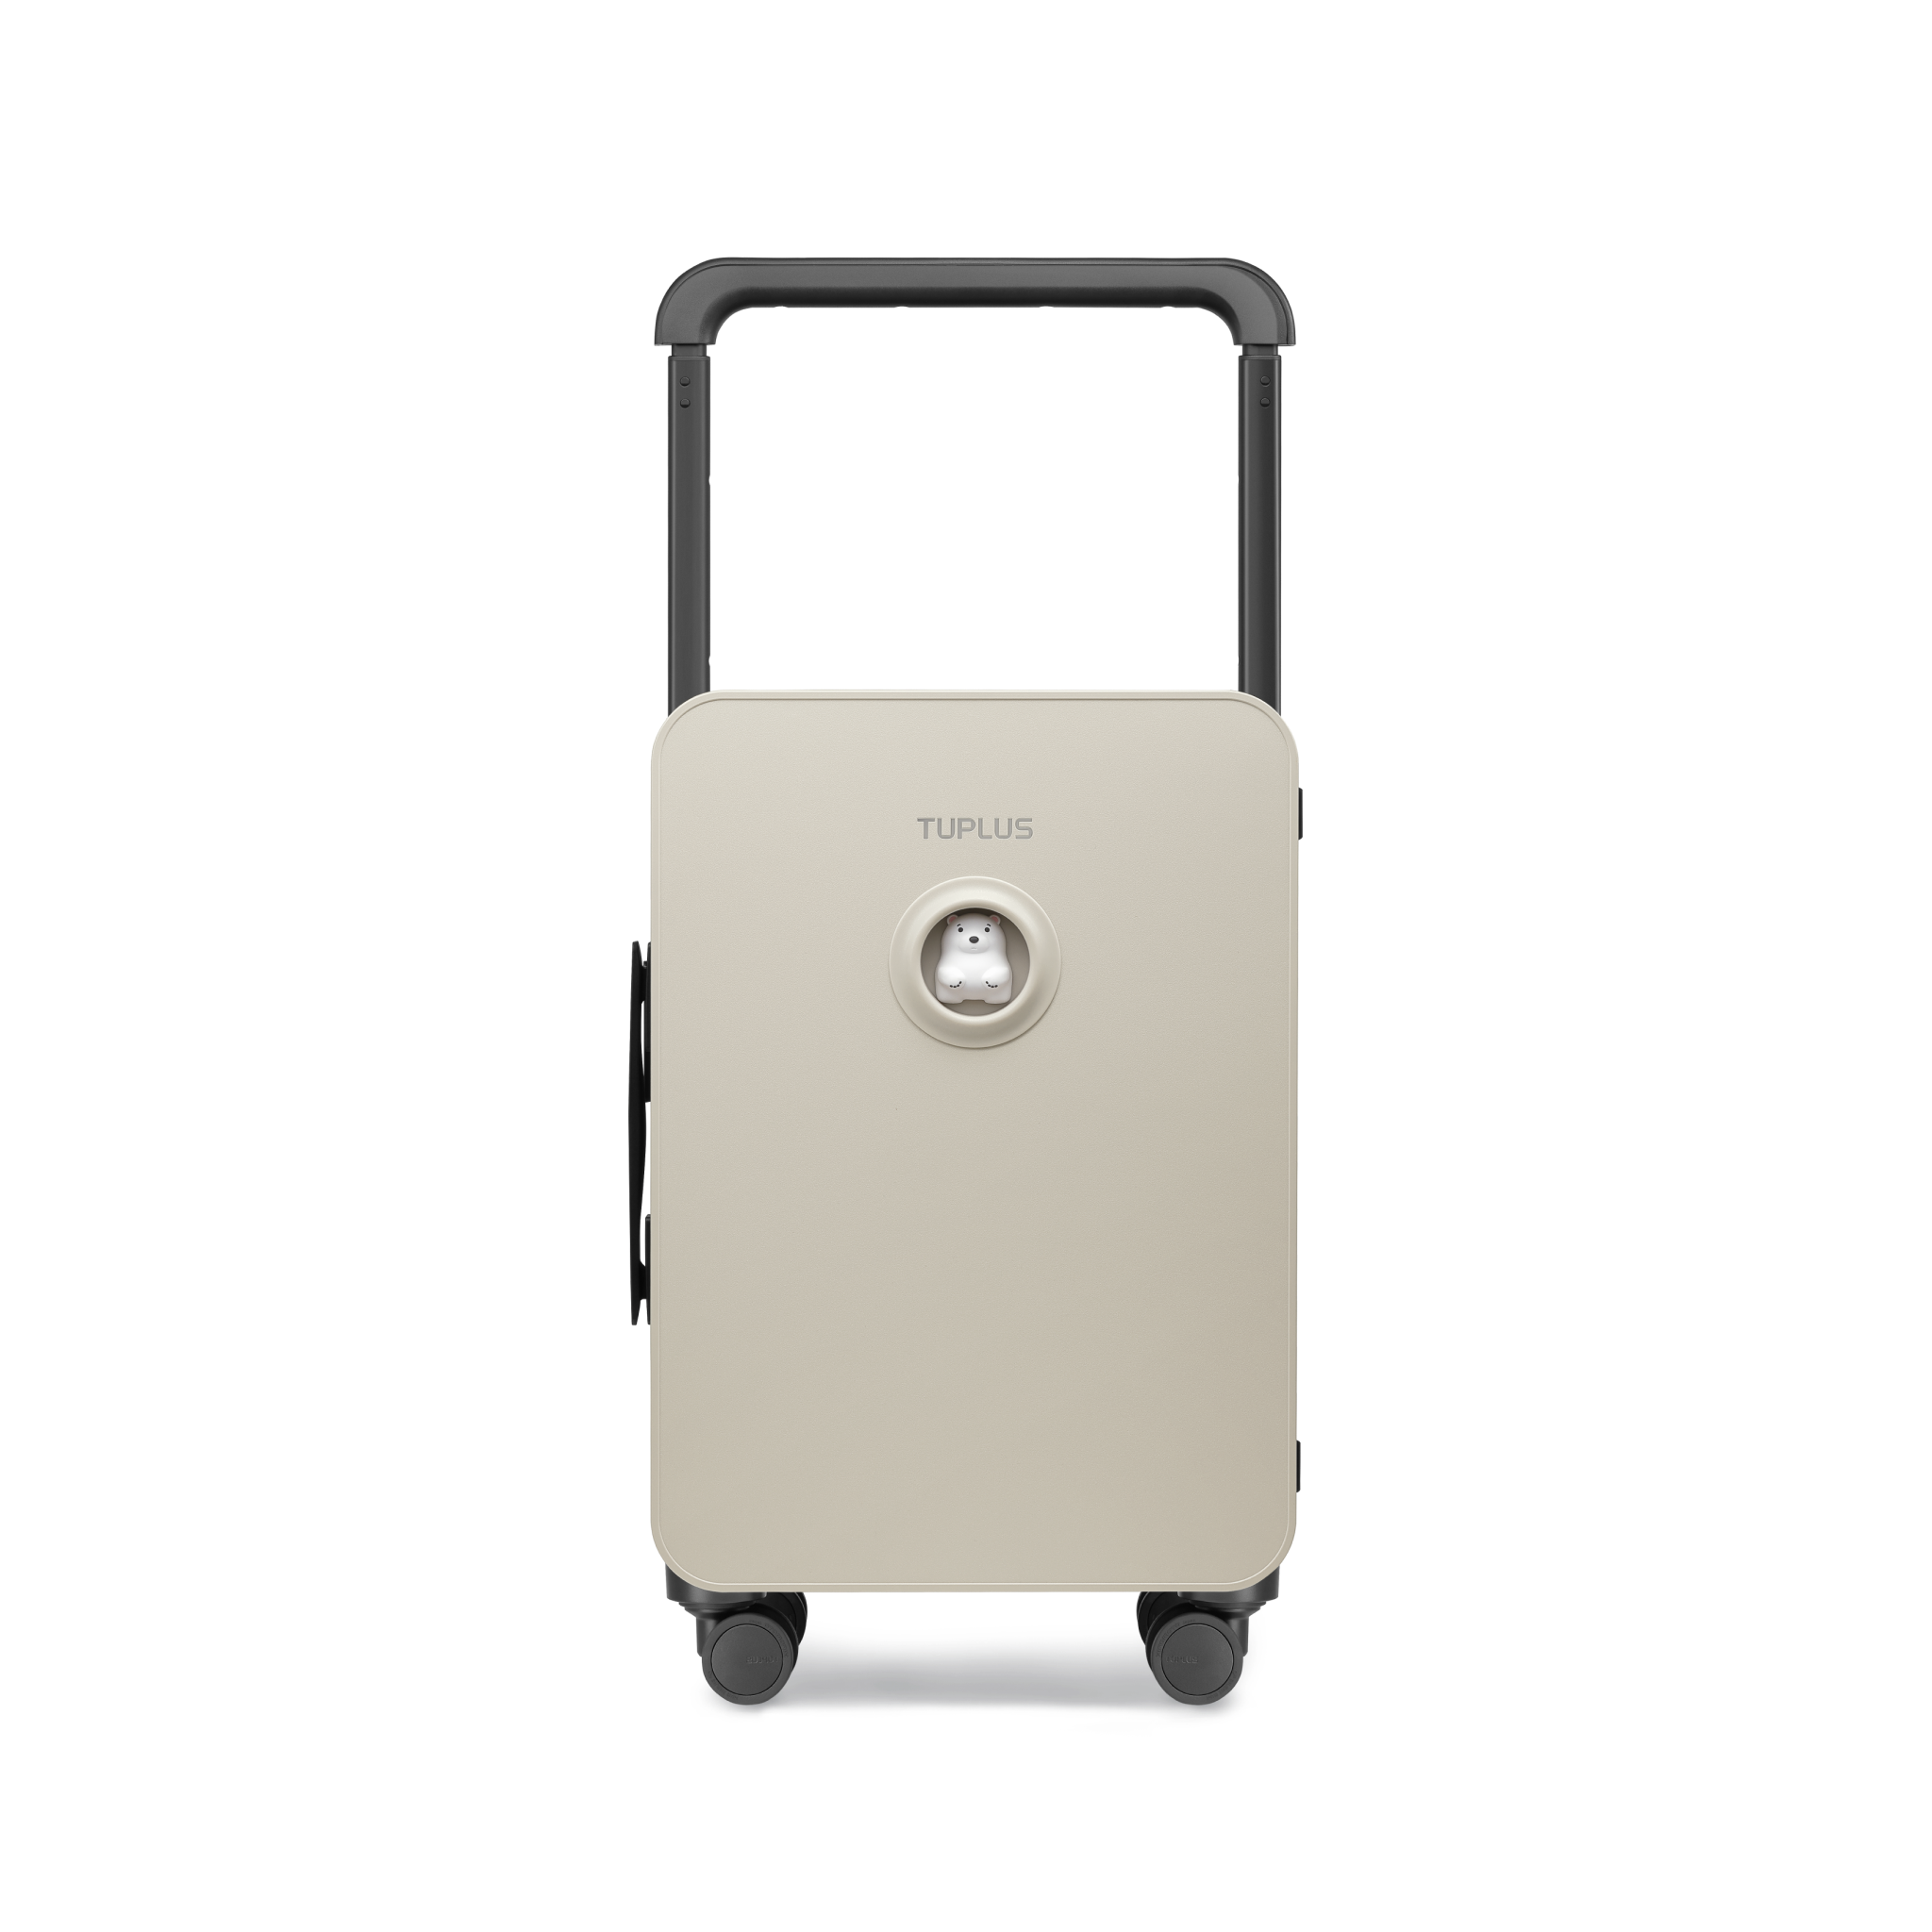 TUPLUS Balance Standard Carry-On Suitcase with Animal Figurine